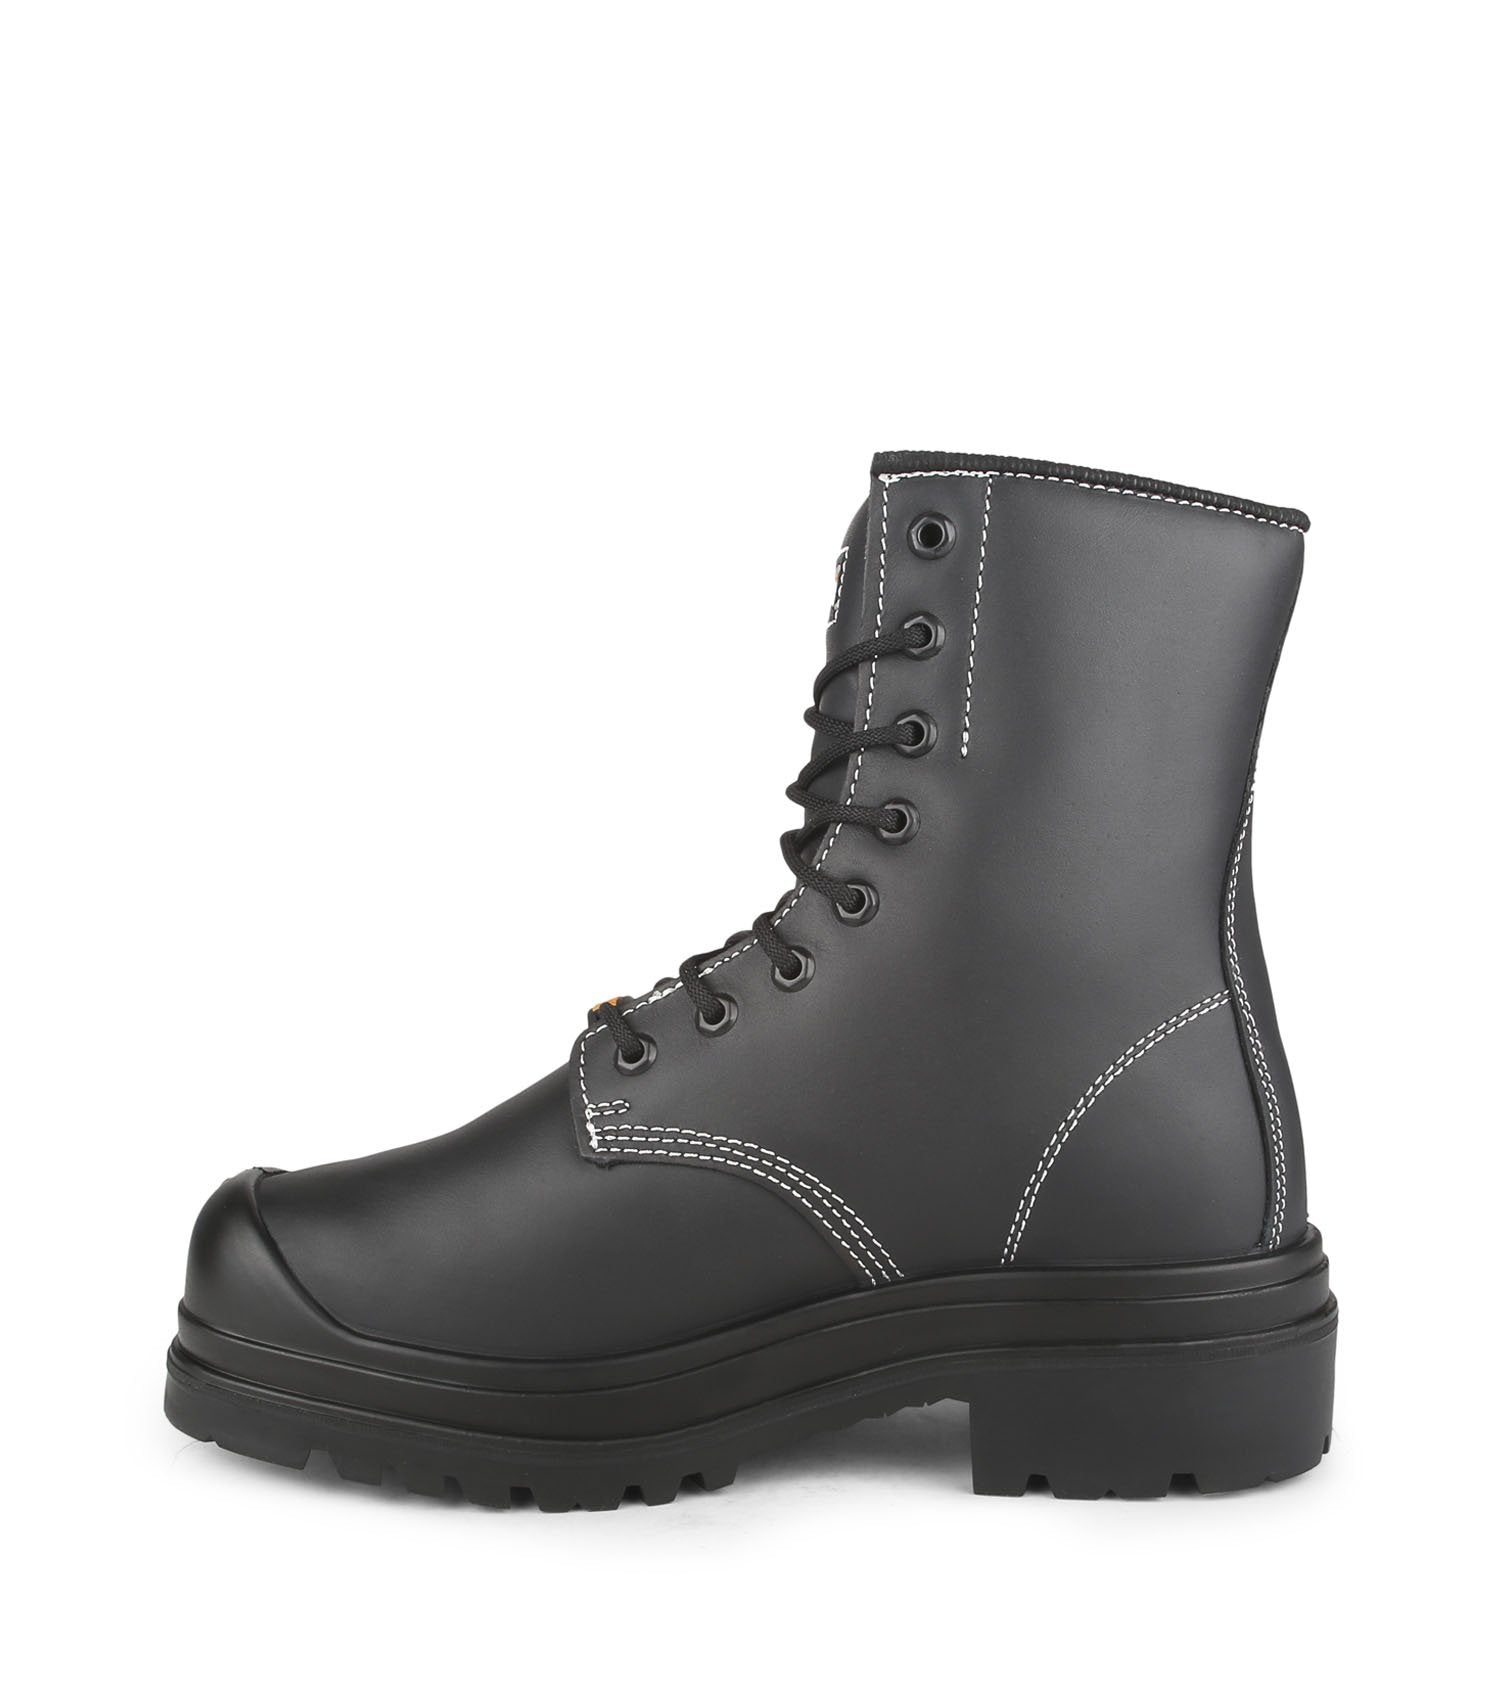 STC MetPro Steel Toe 8" Internal Metguard Men's Safety Mining Boots | Black | Sizes 4 - 14 Work Boots - Cleanflow